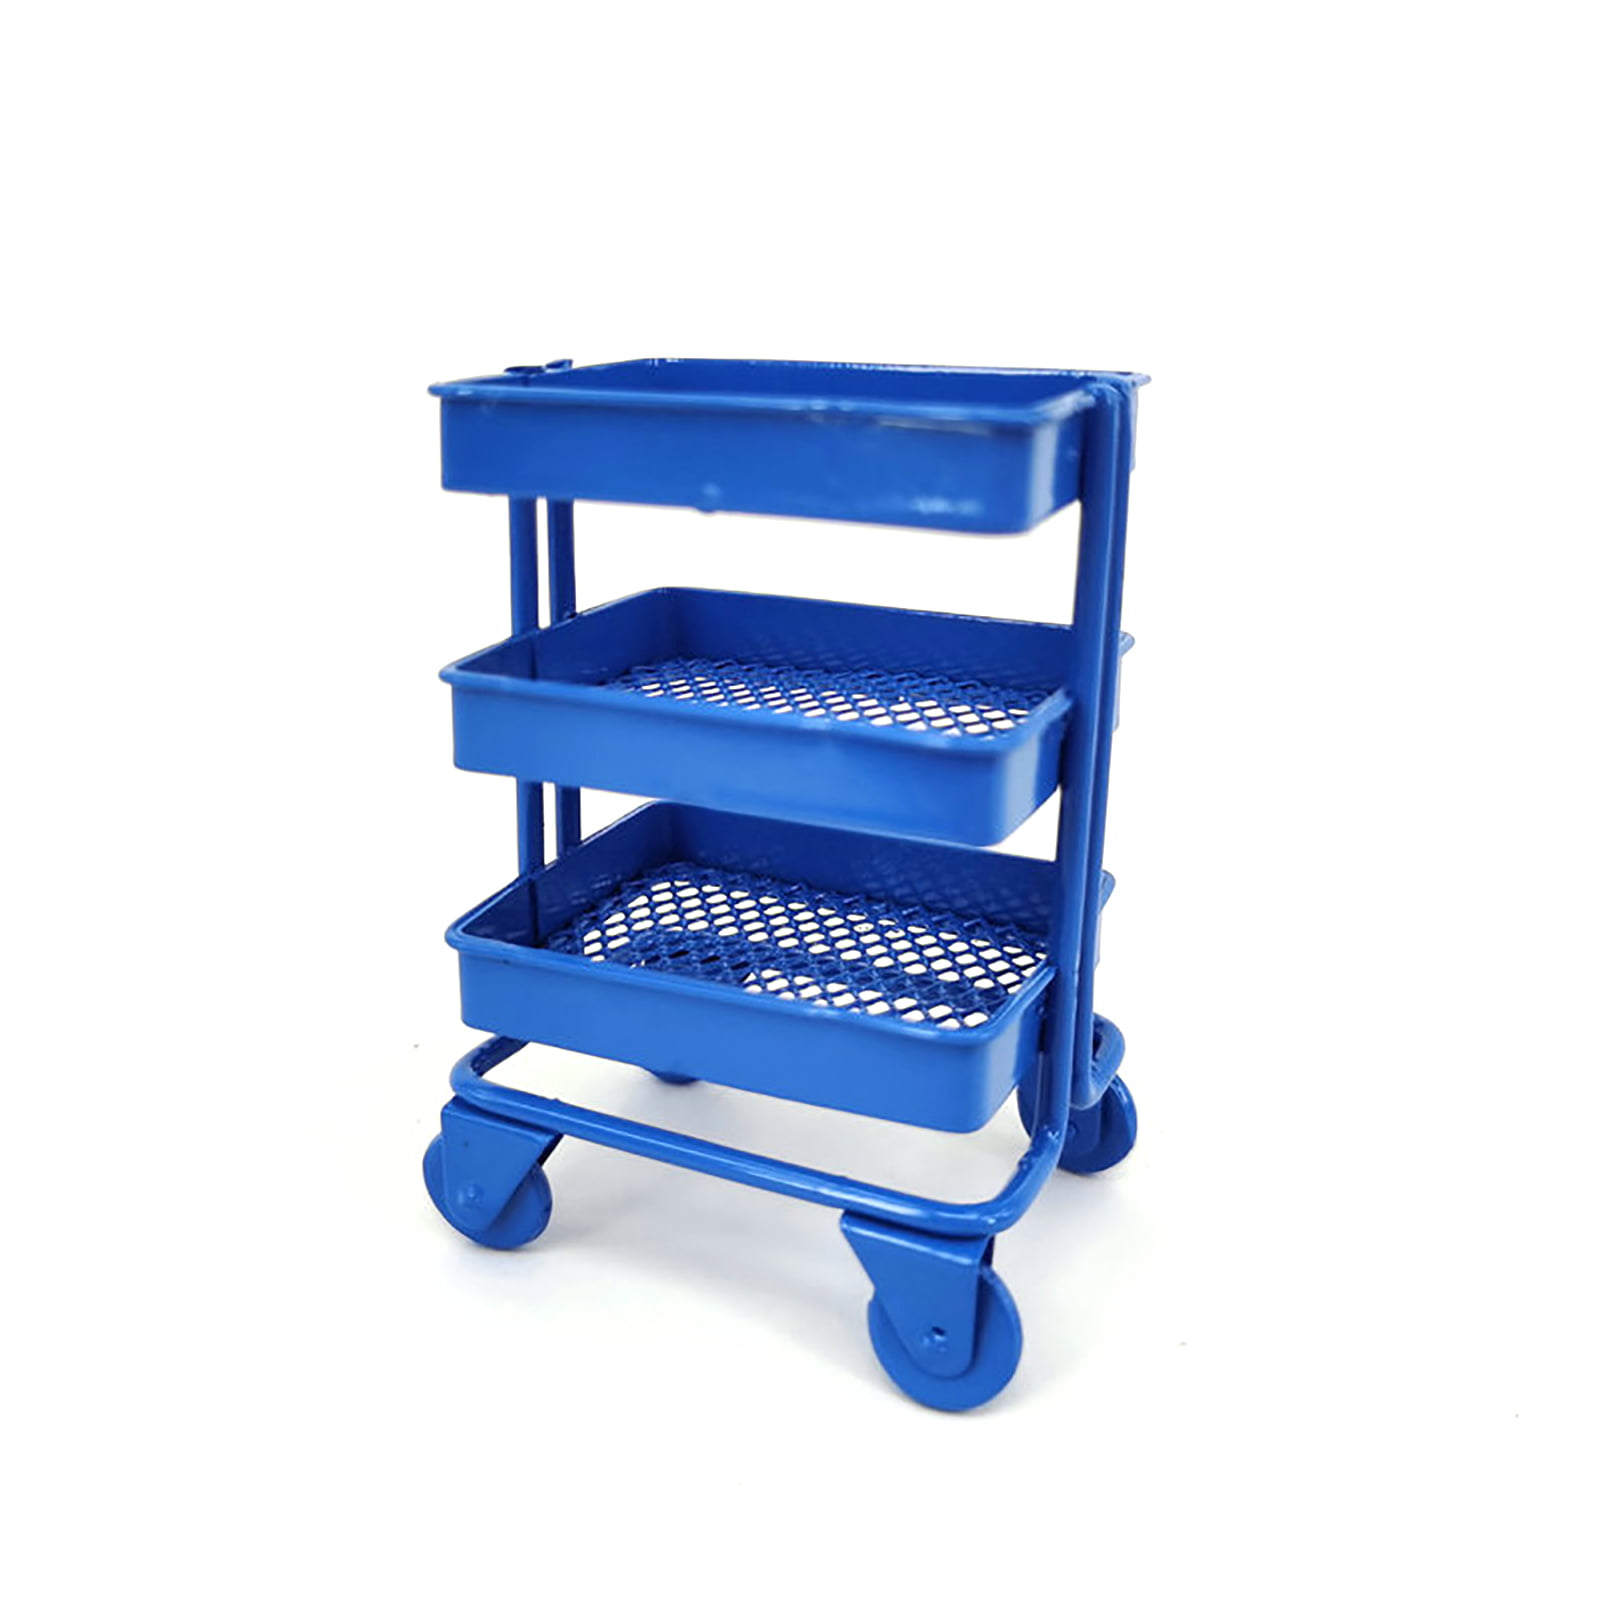 Scale Trolley Storage Shelf Rack Dollhouse Kitchen Room Decor Accs Blue 